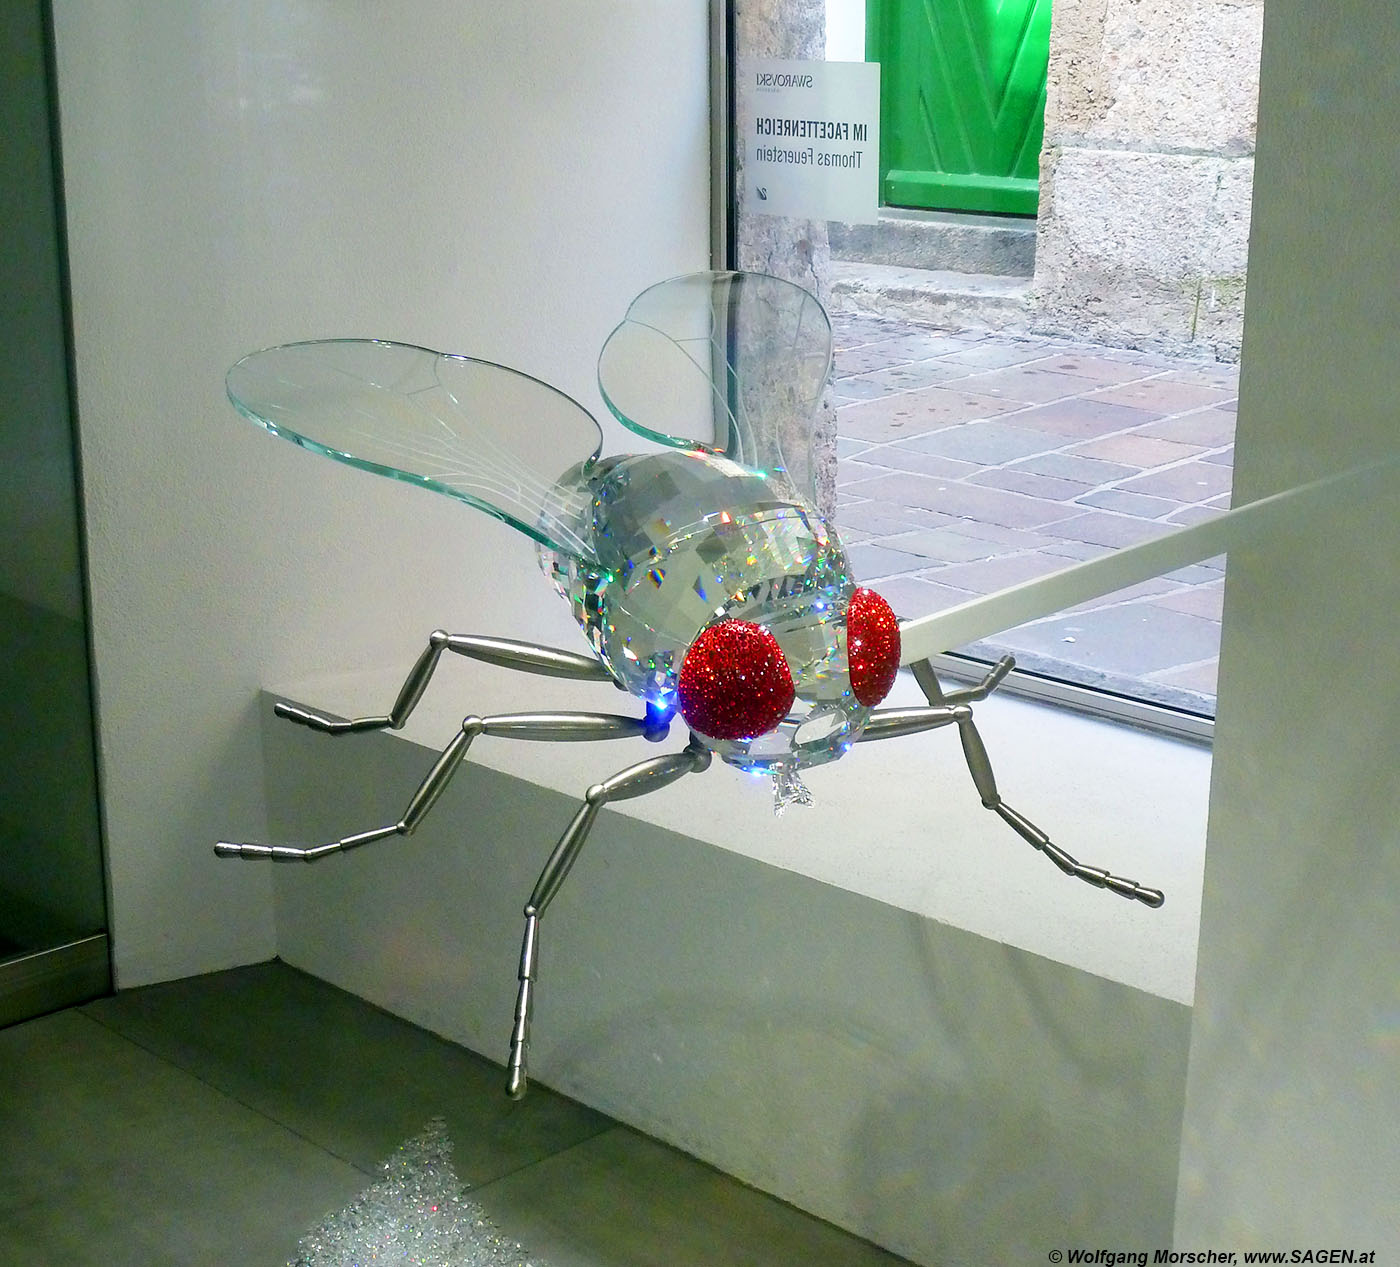 Superfly (Drosophila) - Thomas Feuerstein